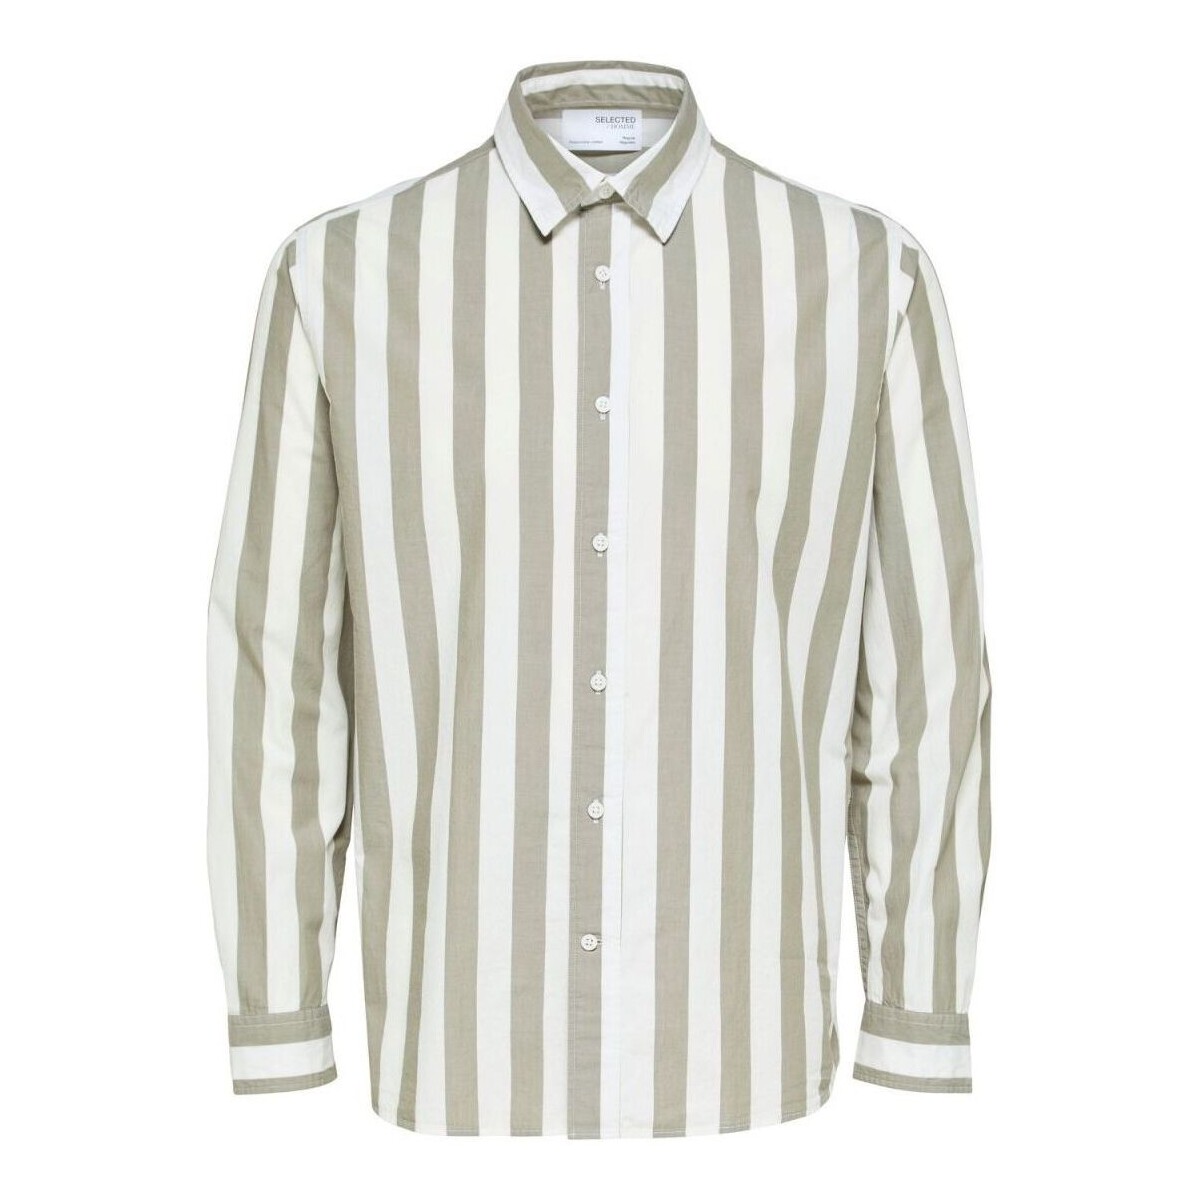 textil Hombre Camisas manga larga Selected 16088289 REGREDSTER-VETIVER Blanco